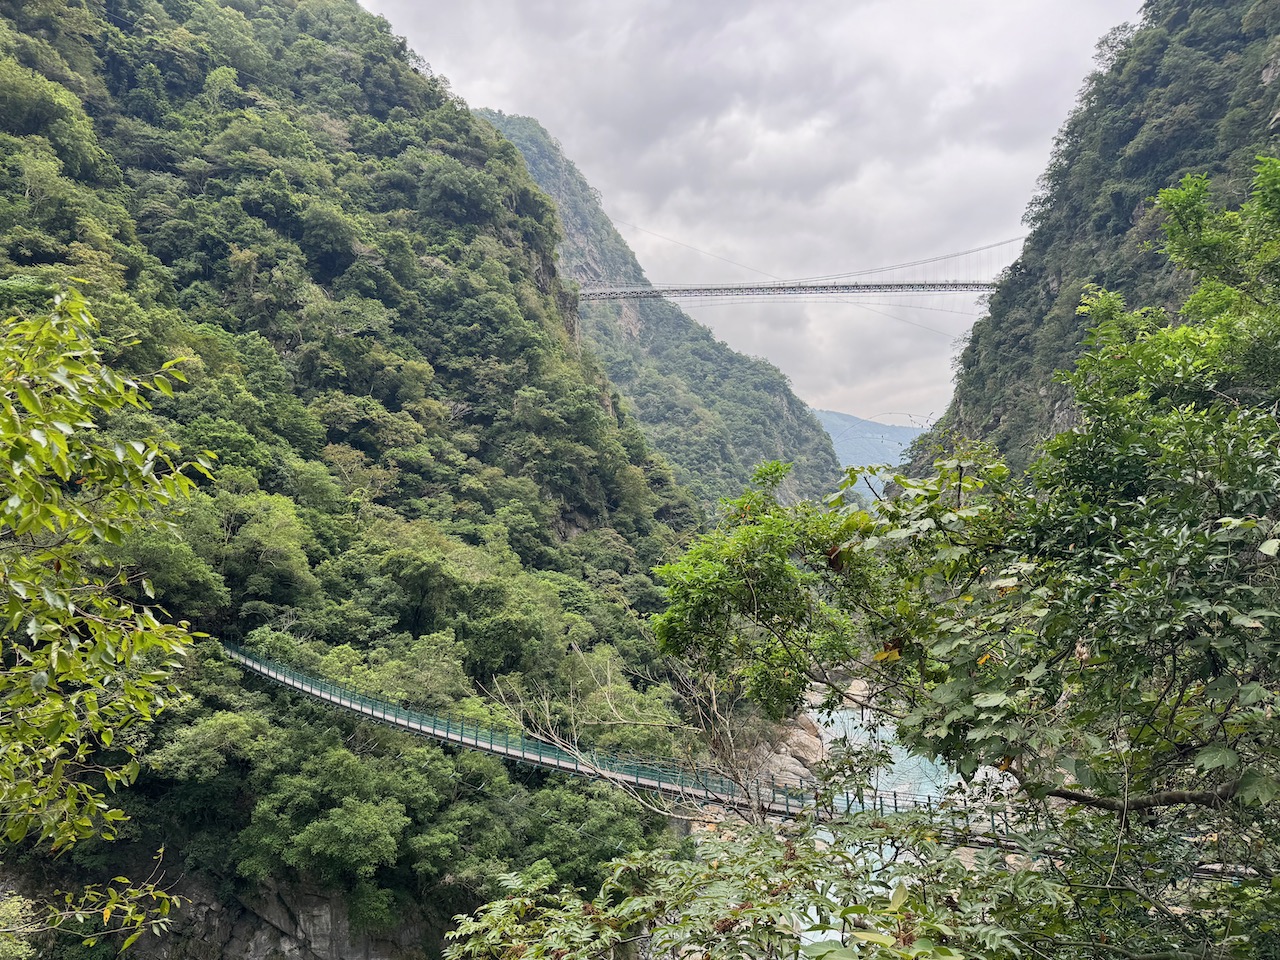 Footbridges over the Taroko gorge